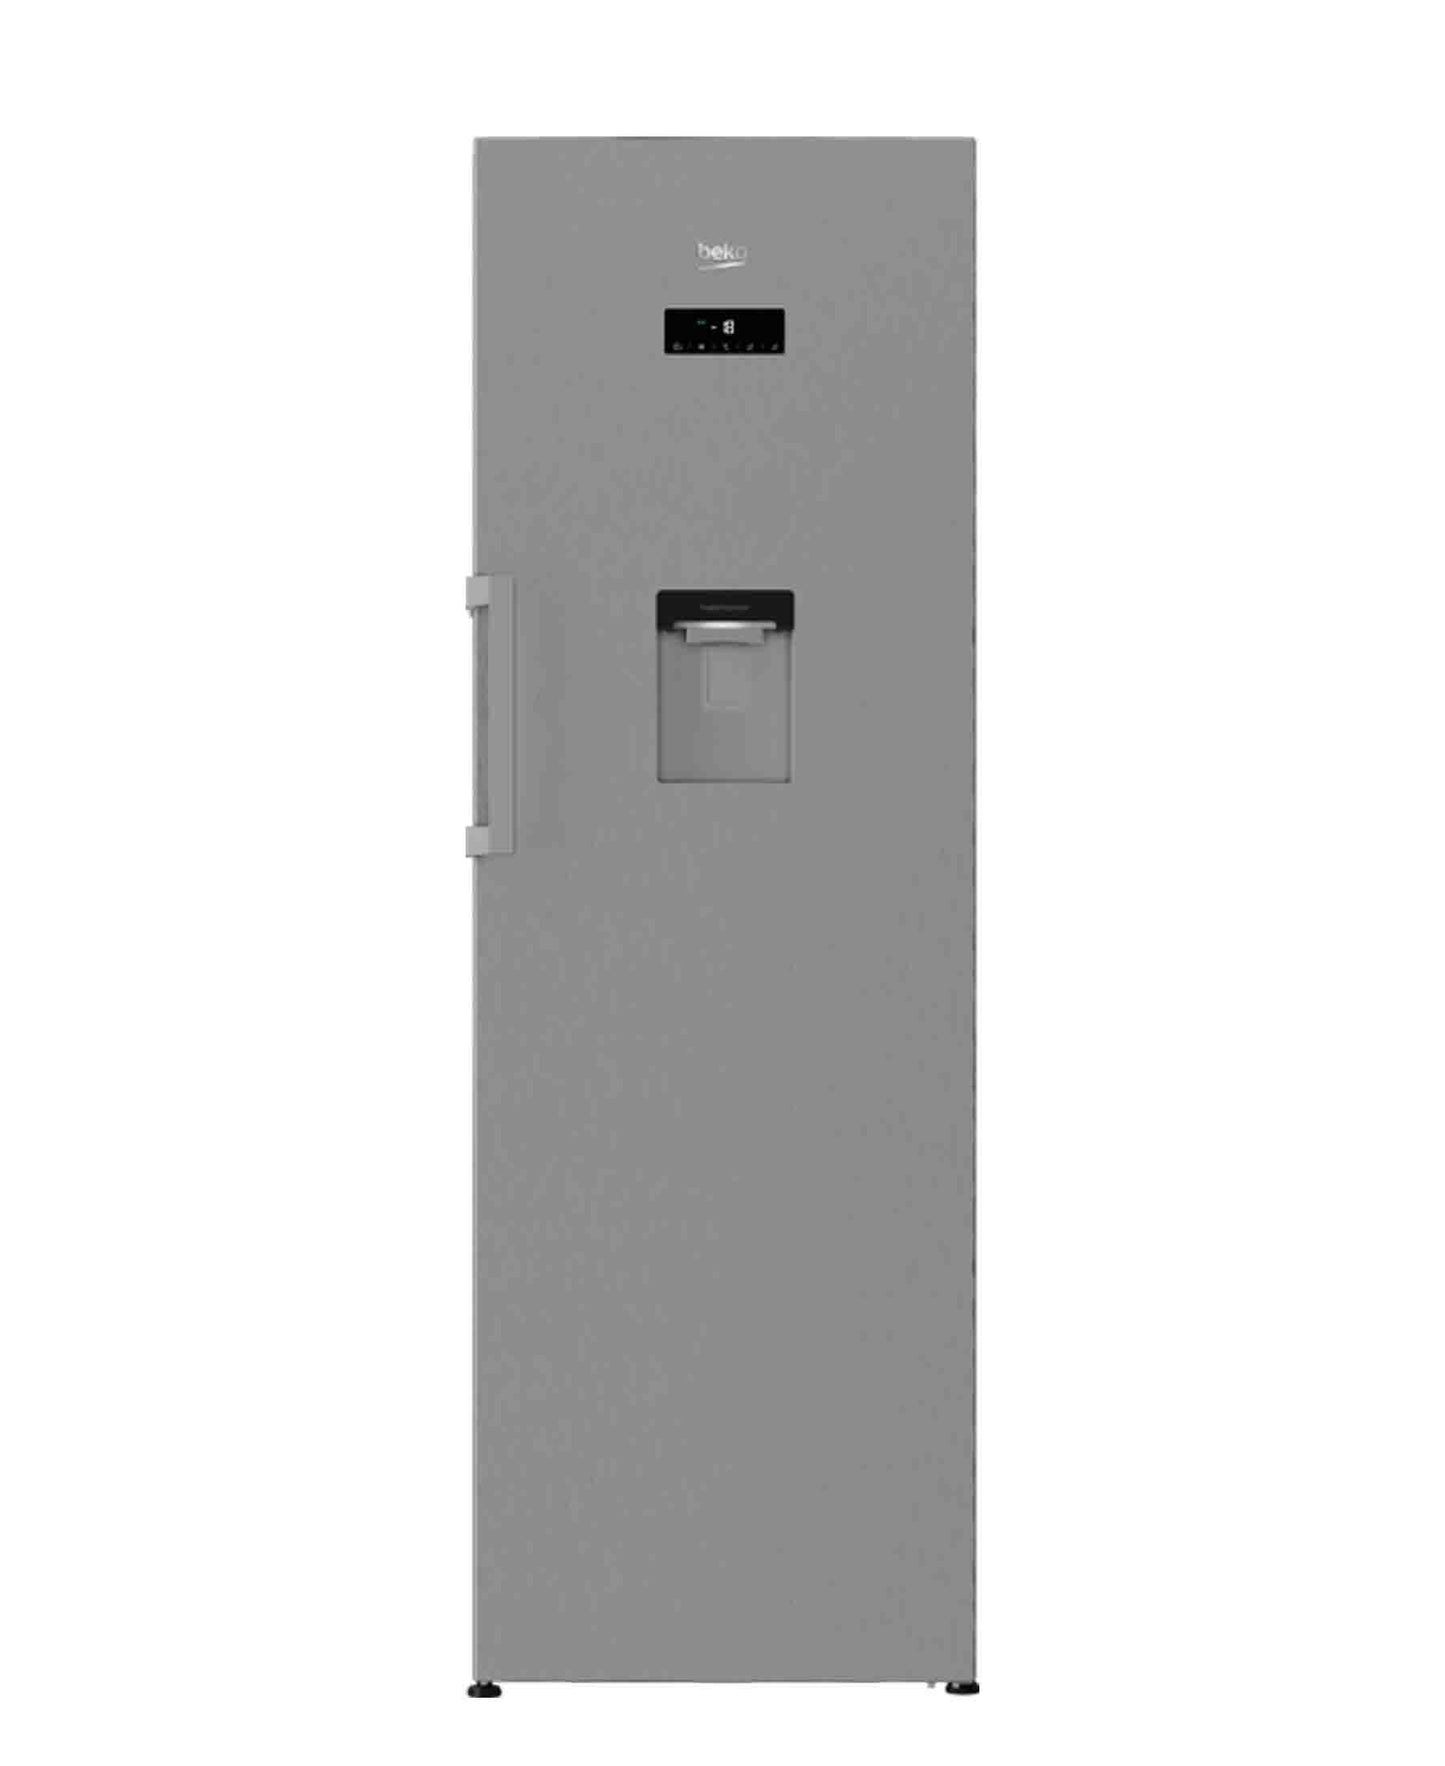 Beko Upright Fridge With Water Dispenser Full No Frost - Metallic